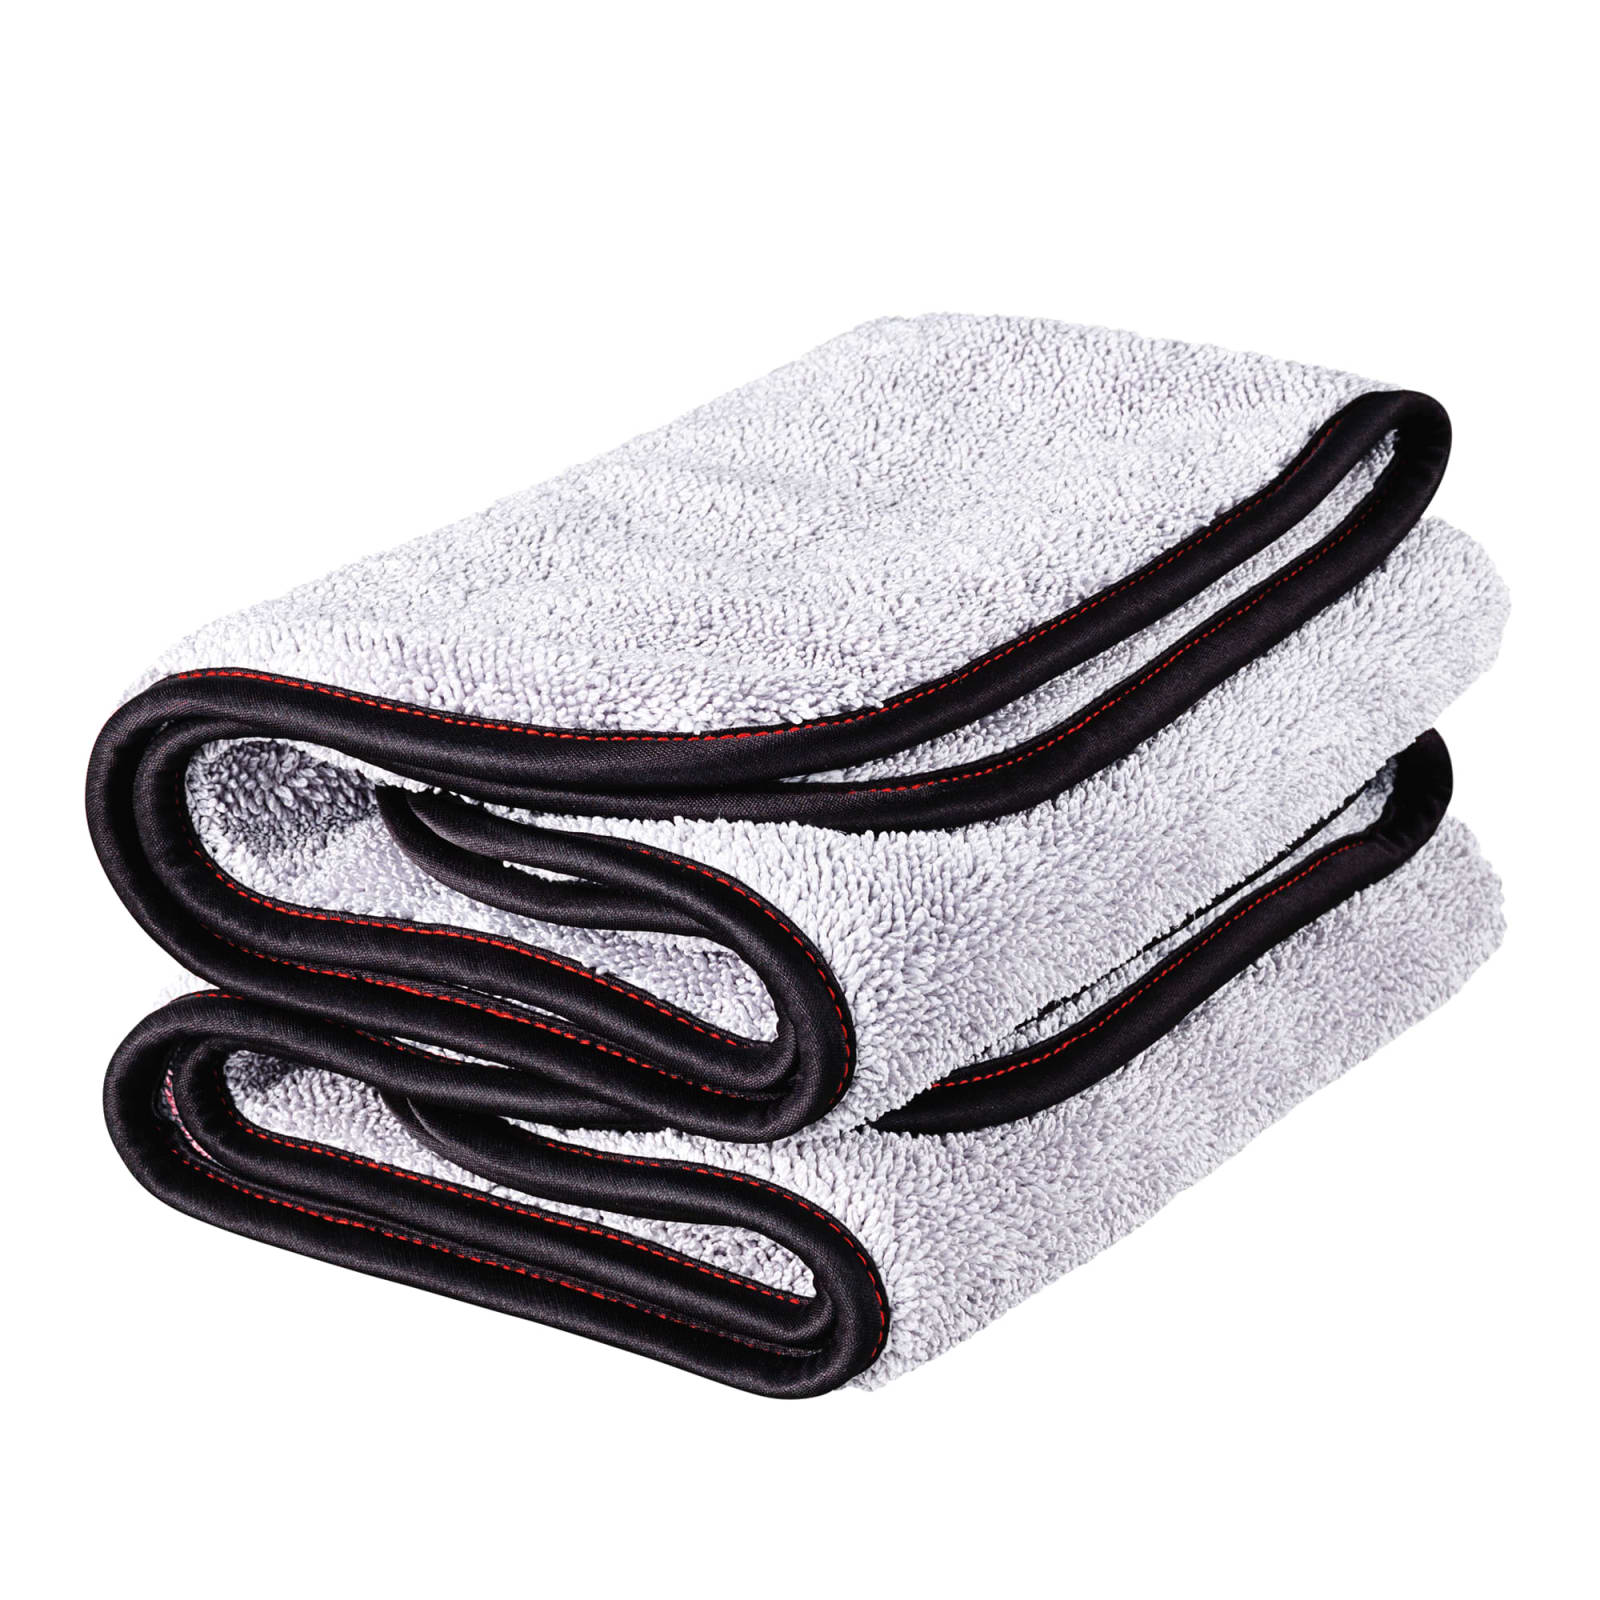 Mini Miner Dual-Pile Utility Towels